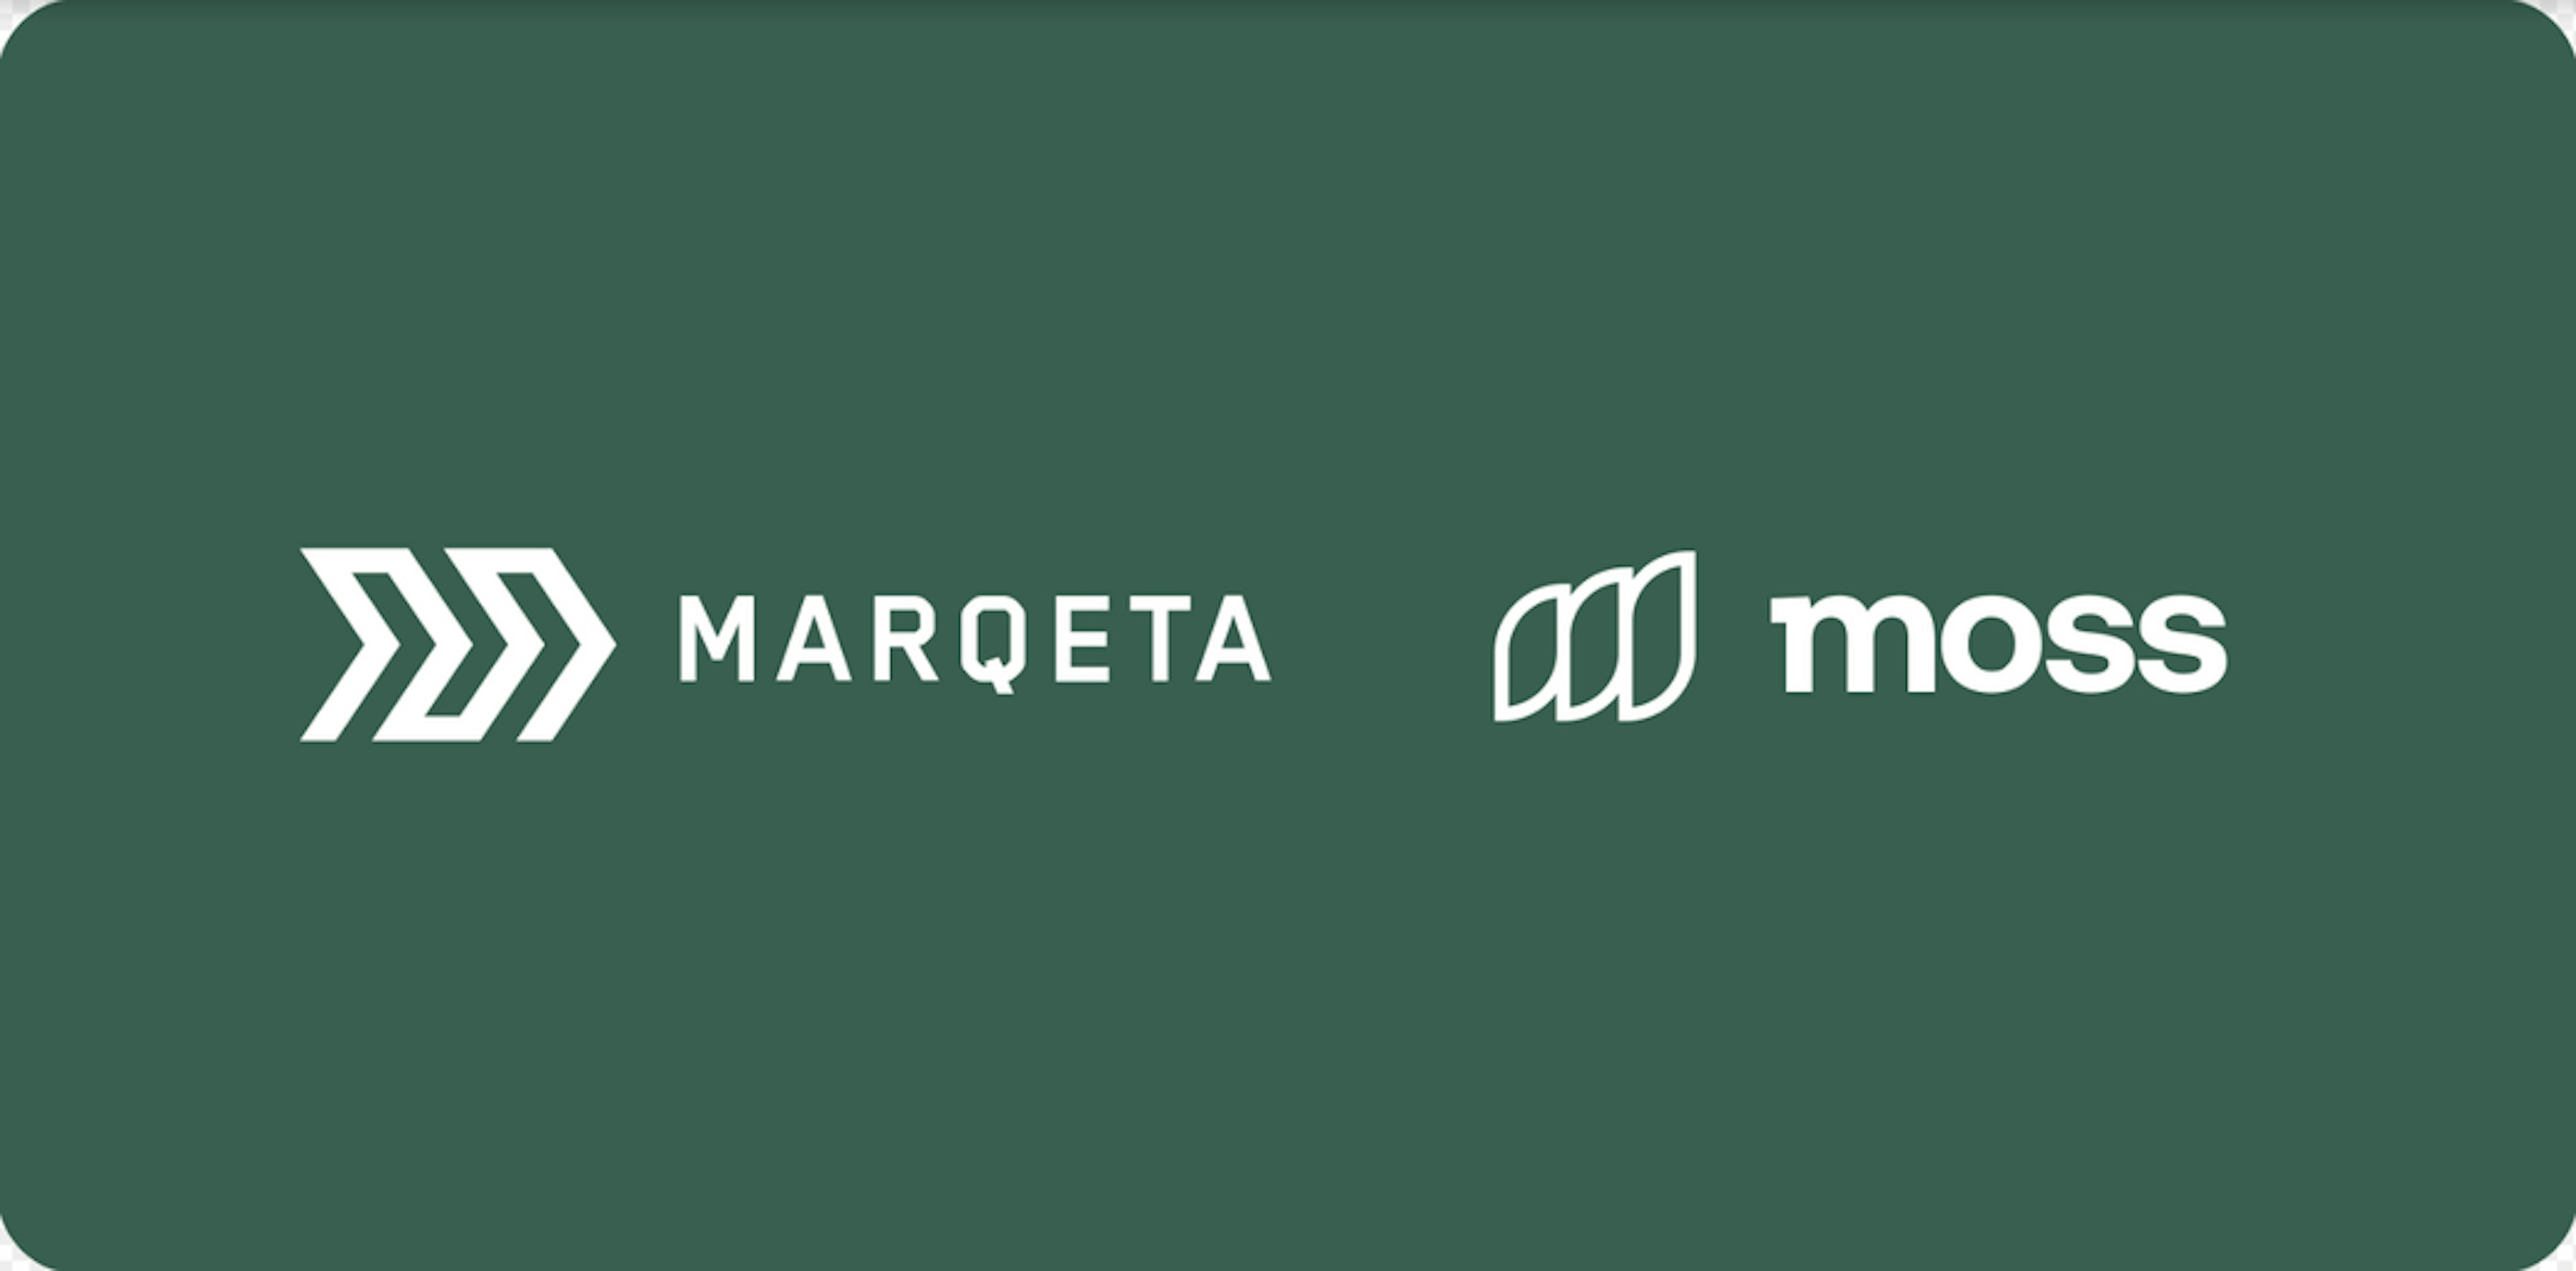 Moss & Marqeta – achieving international growth through innovative partnerships